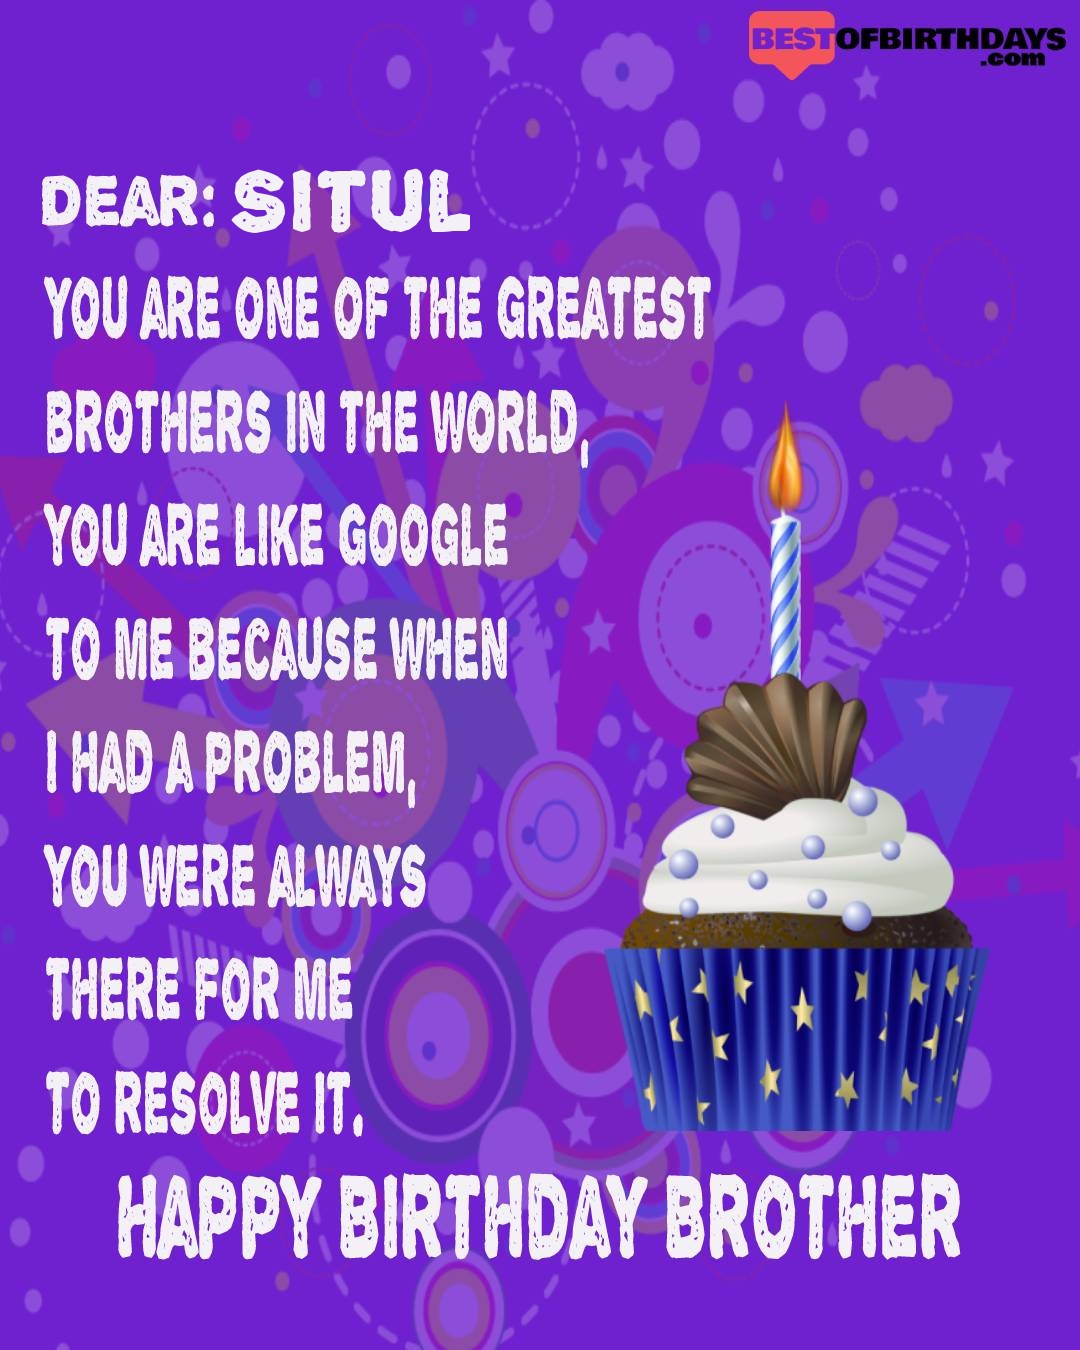 Happy birthday situl bhai brother bro